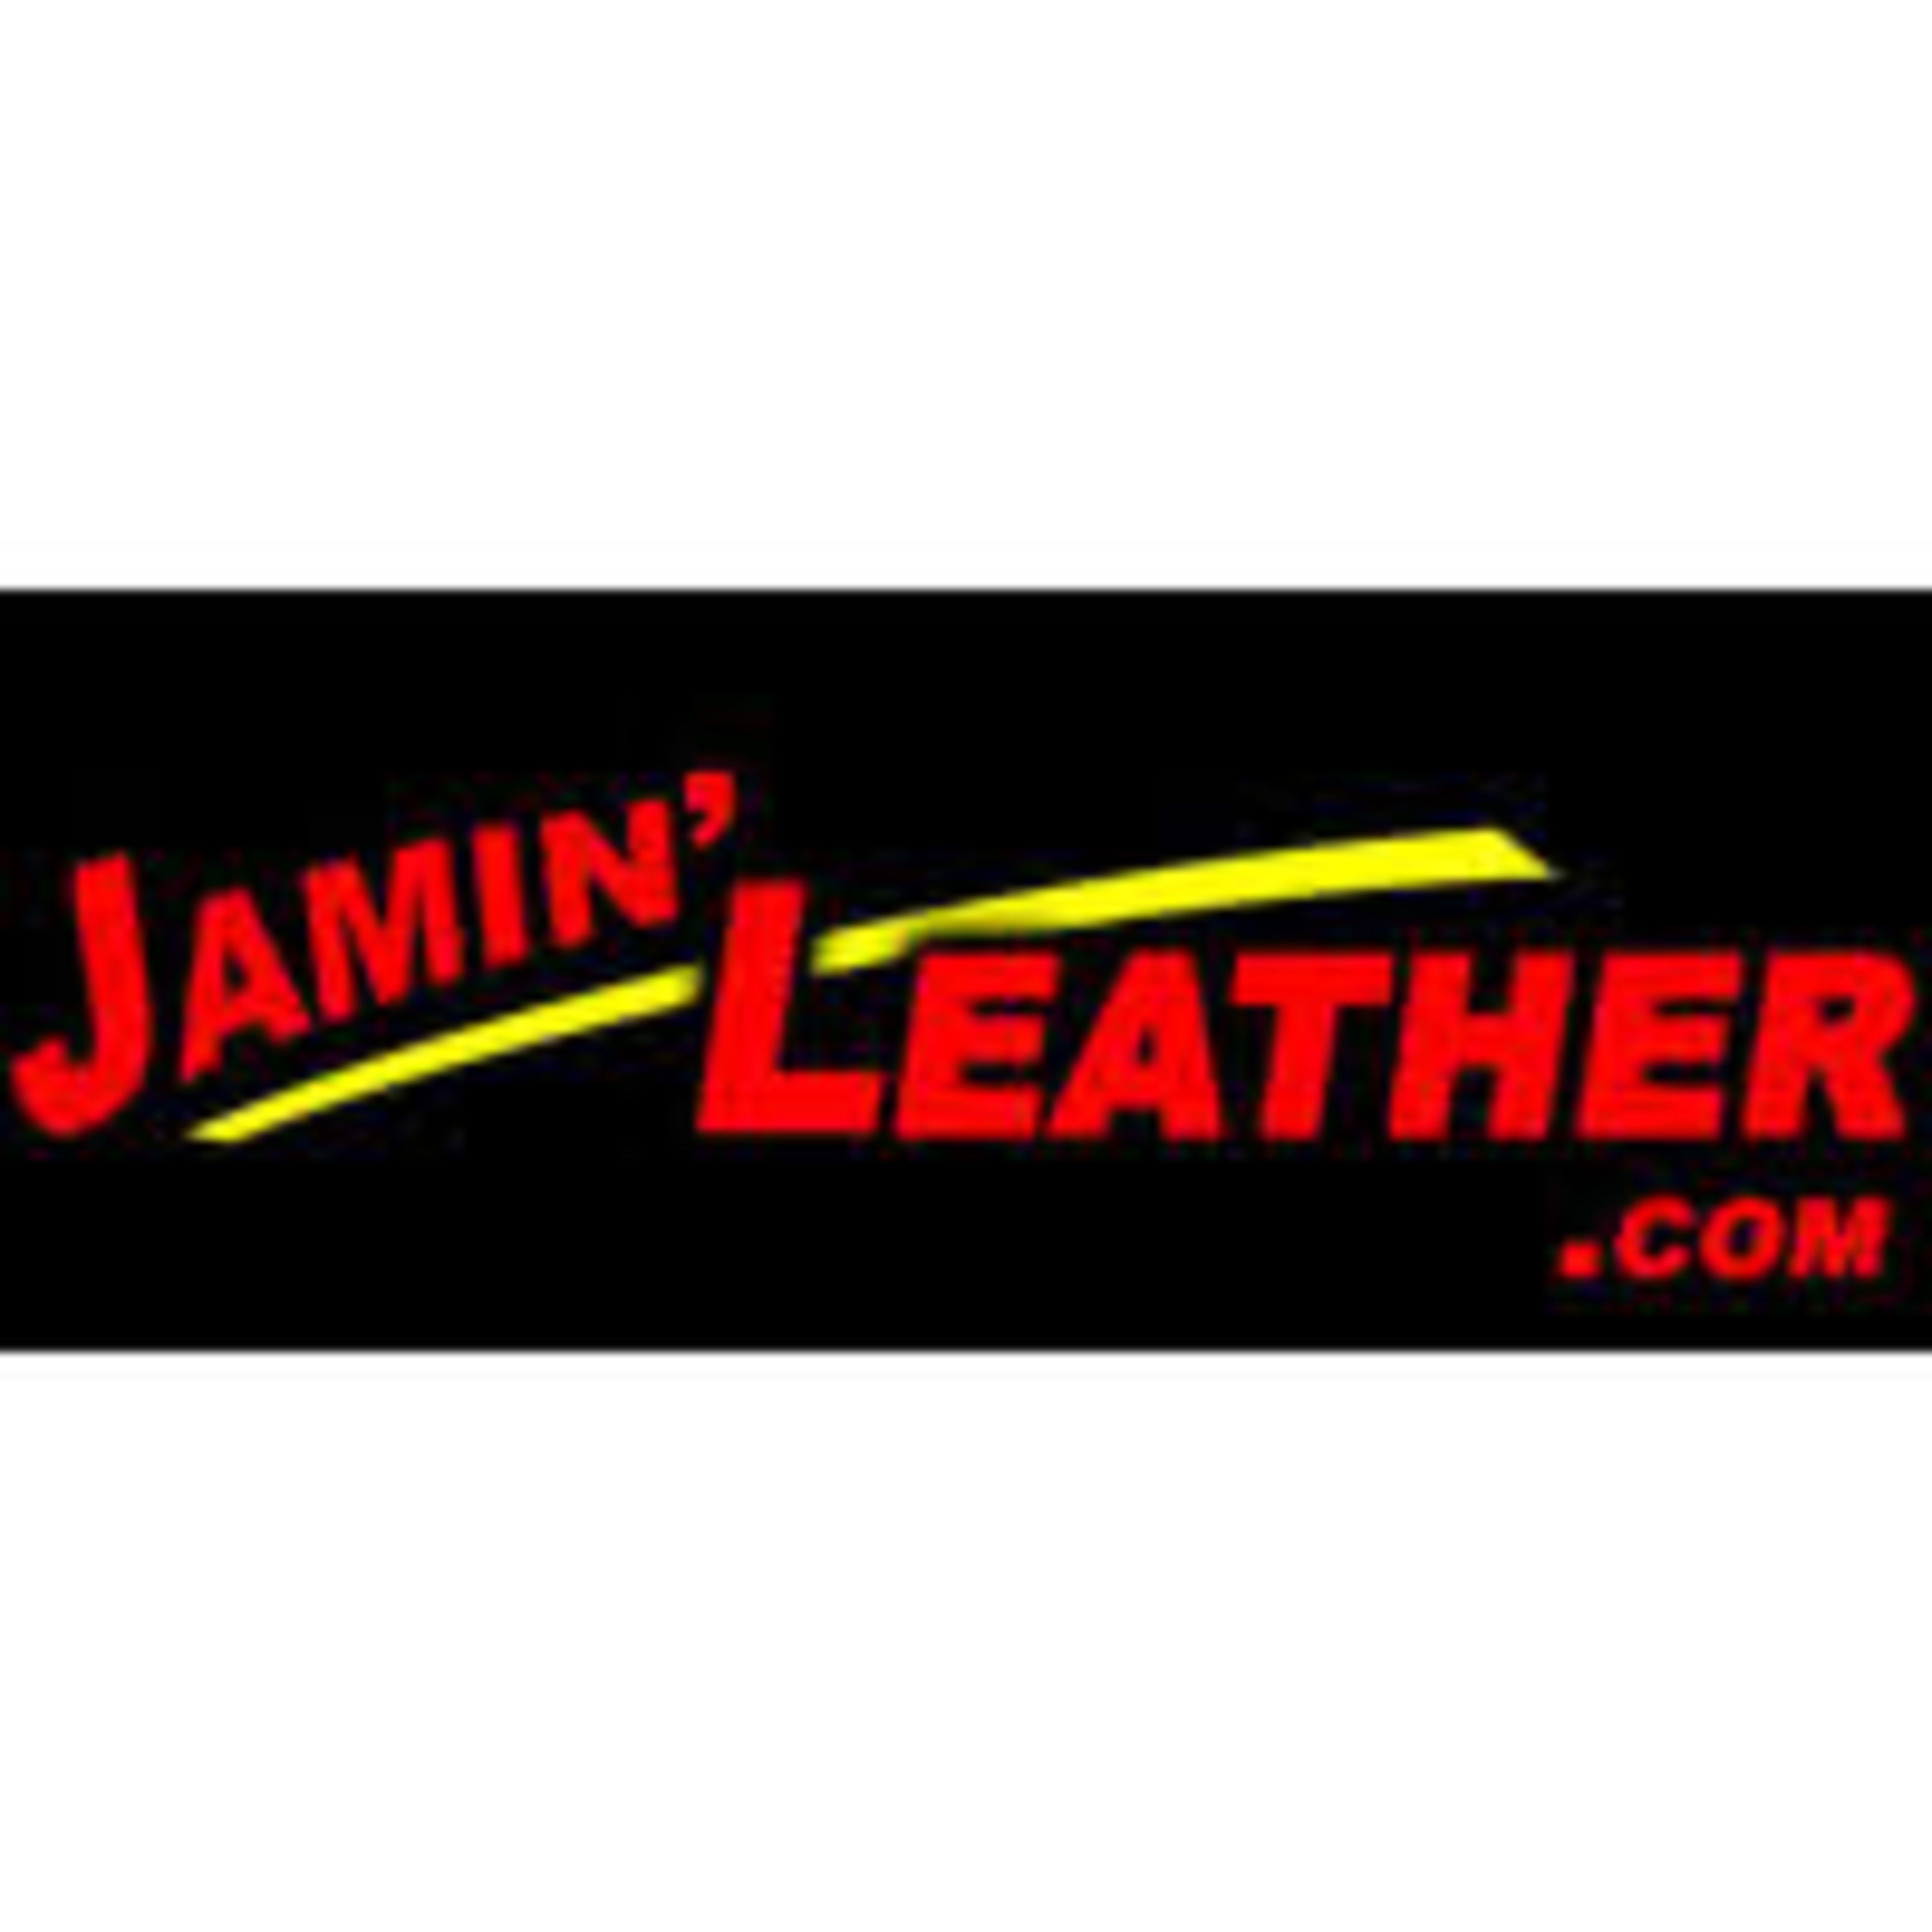 Jamin' LeatherCode